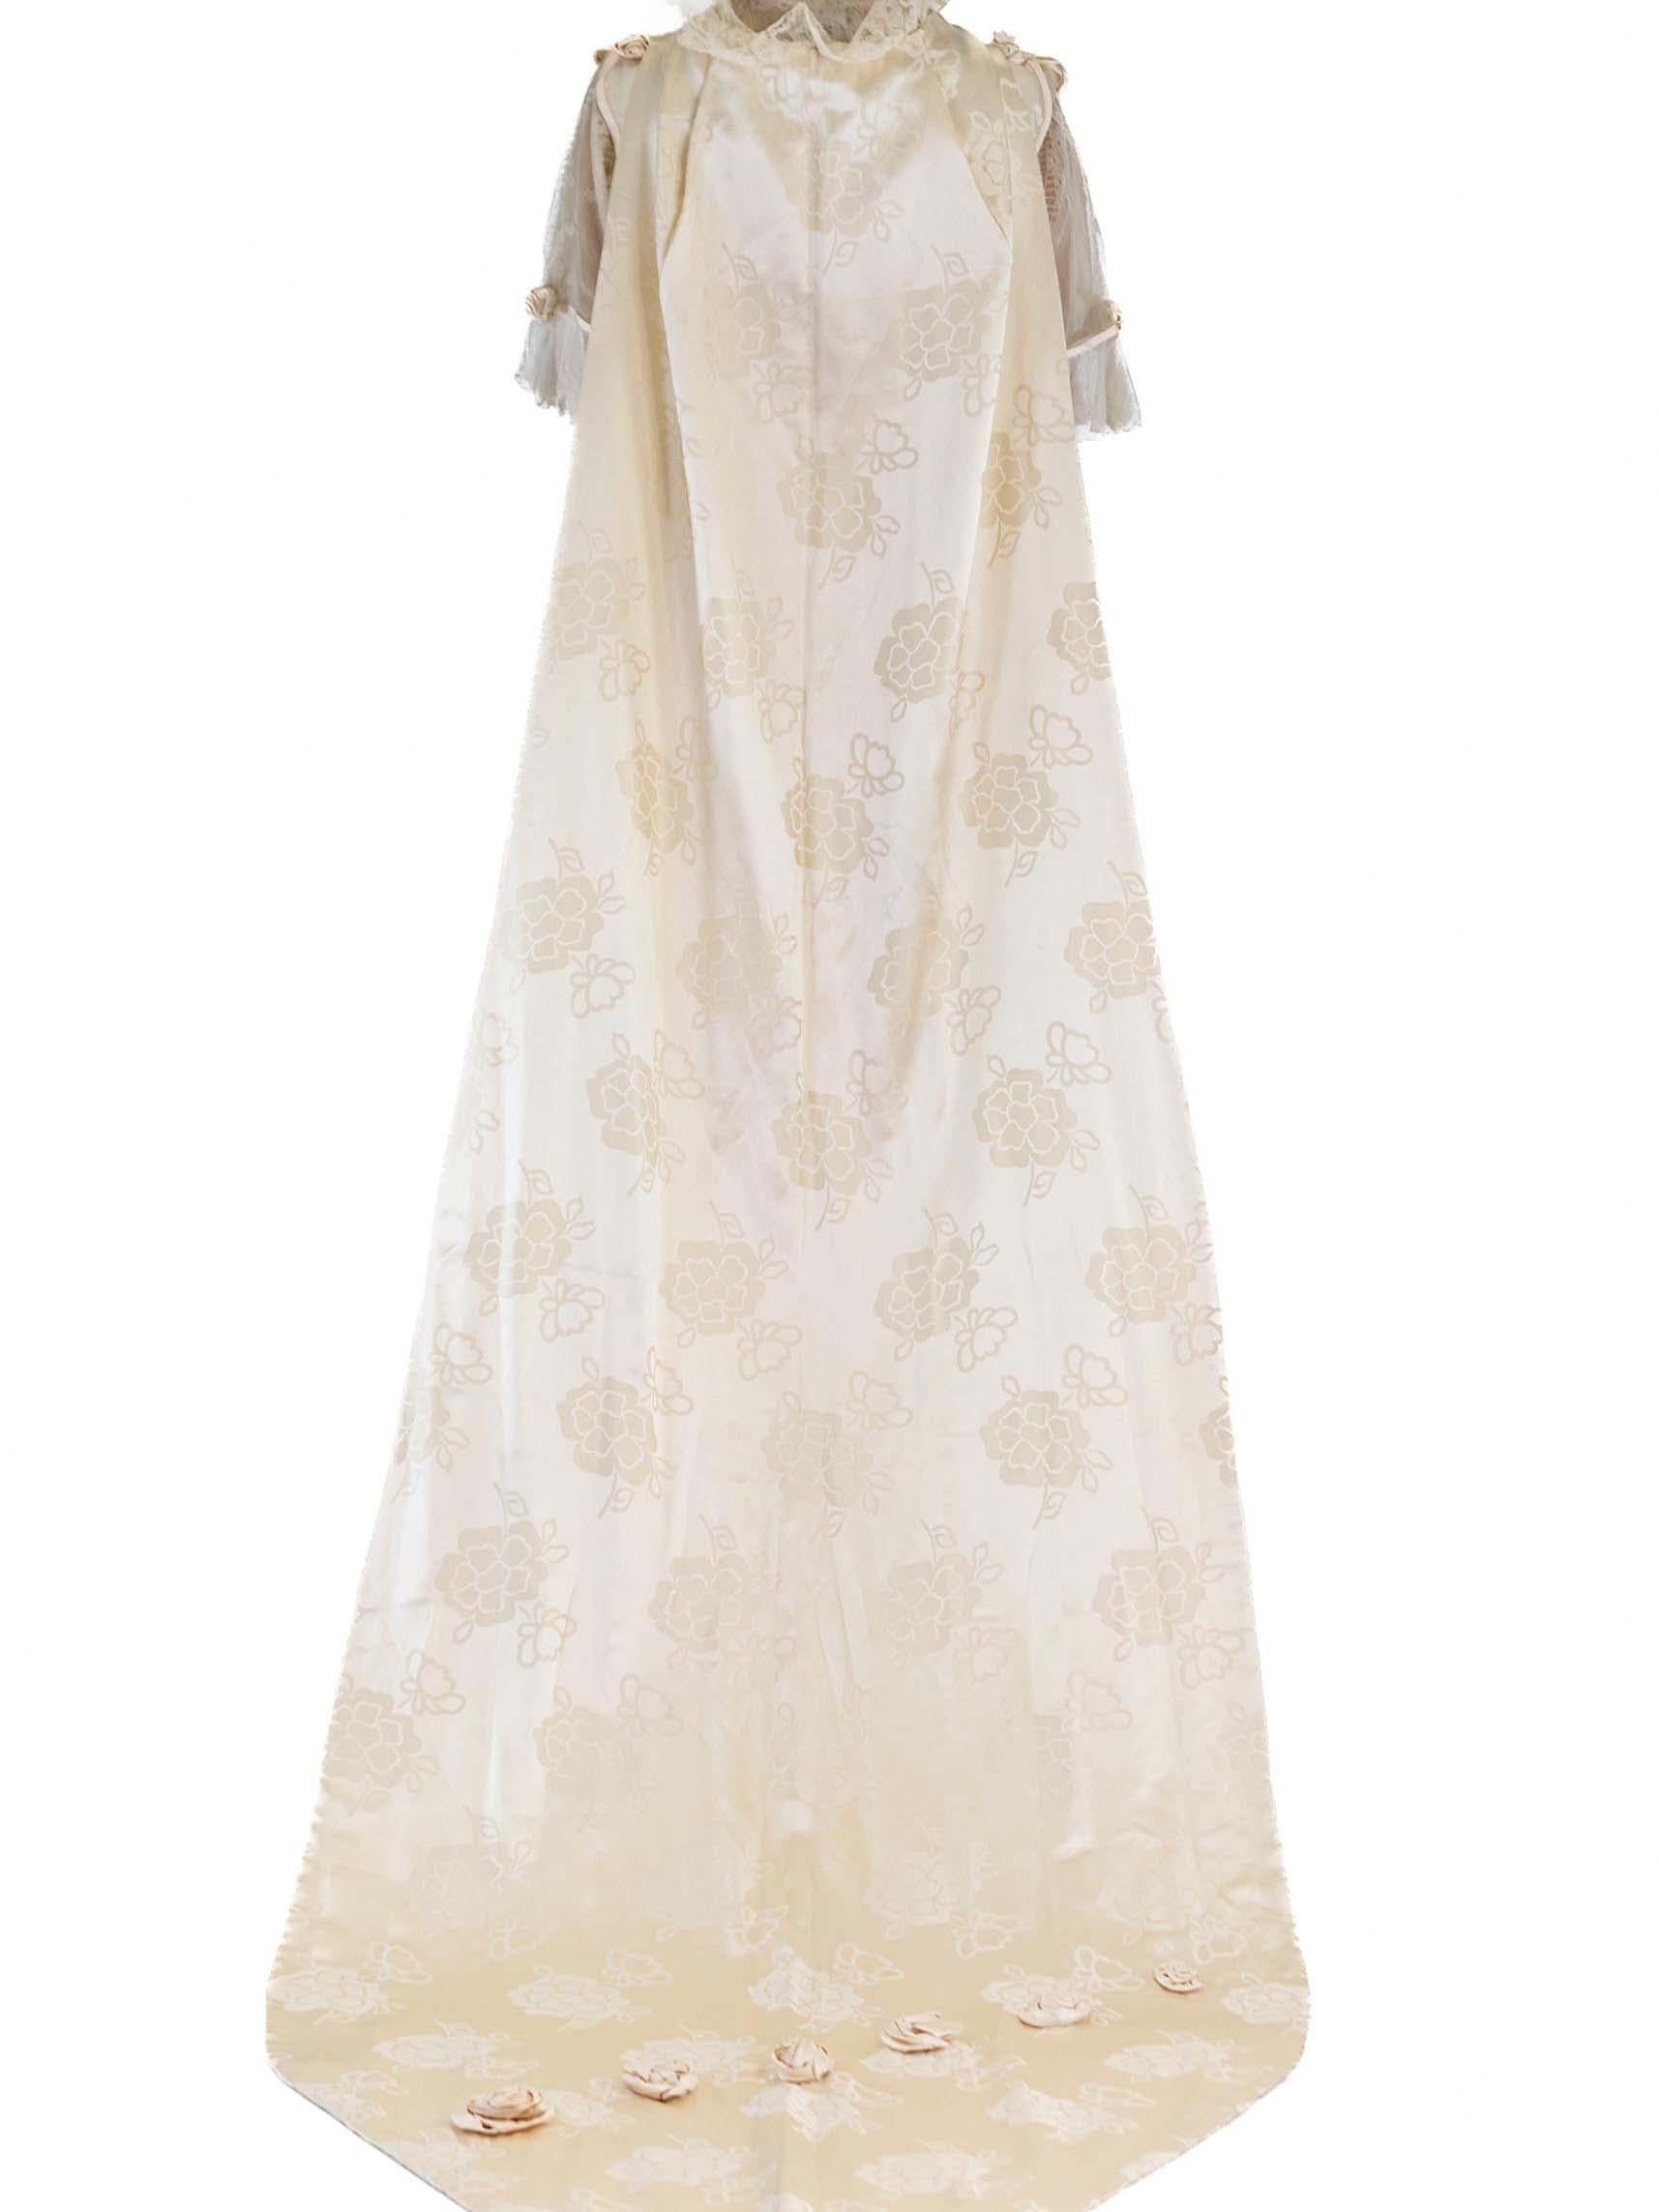 Edwardian Cream Silk Satin & Lace Rare Wedding Or Presentation Gown For Sale 4